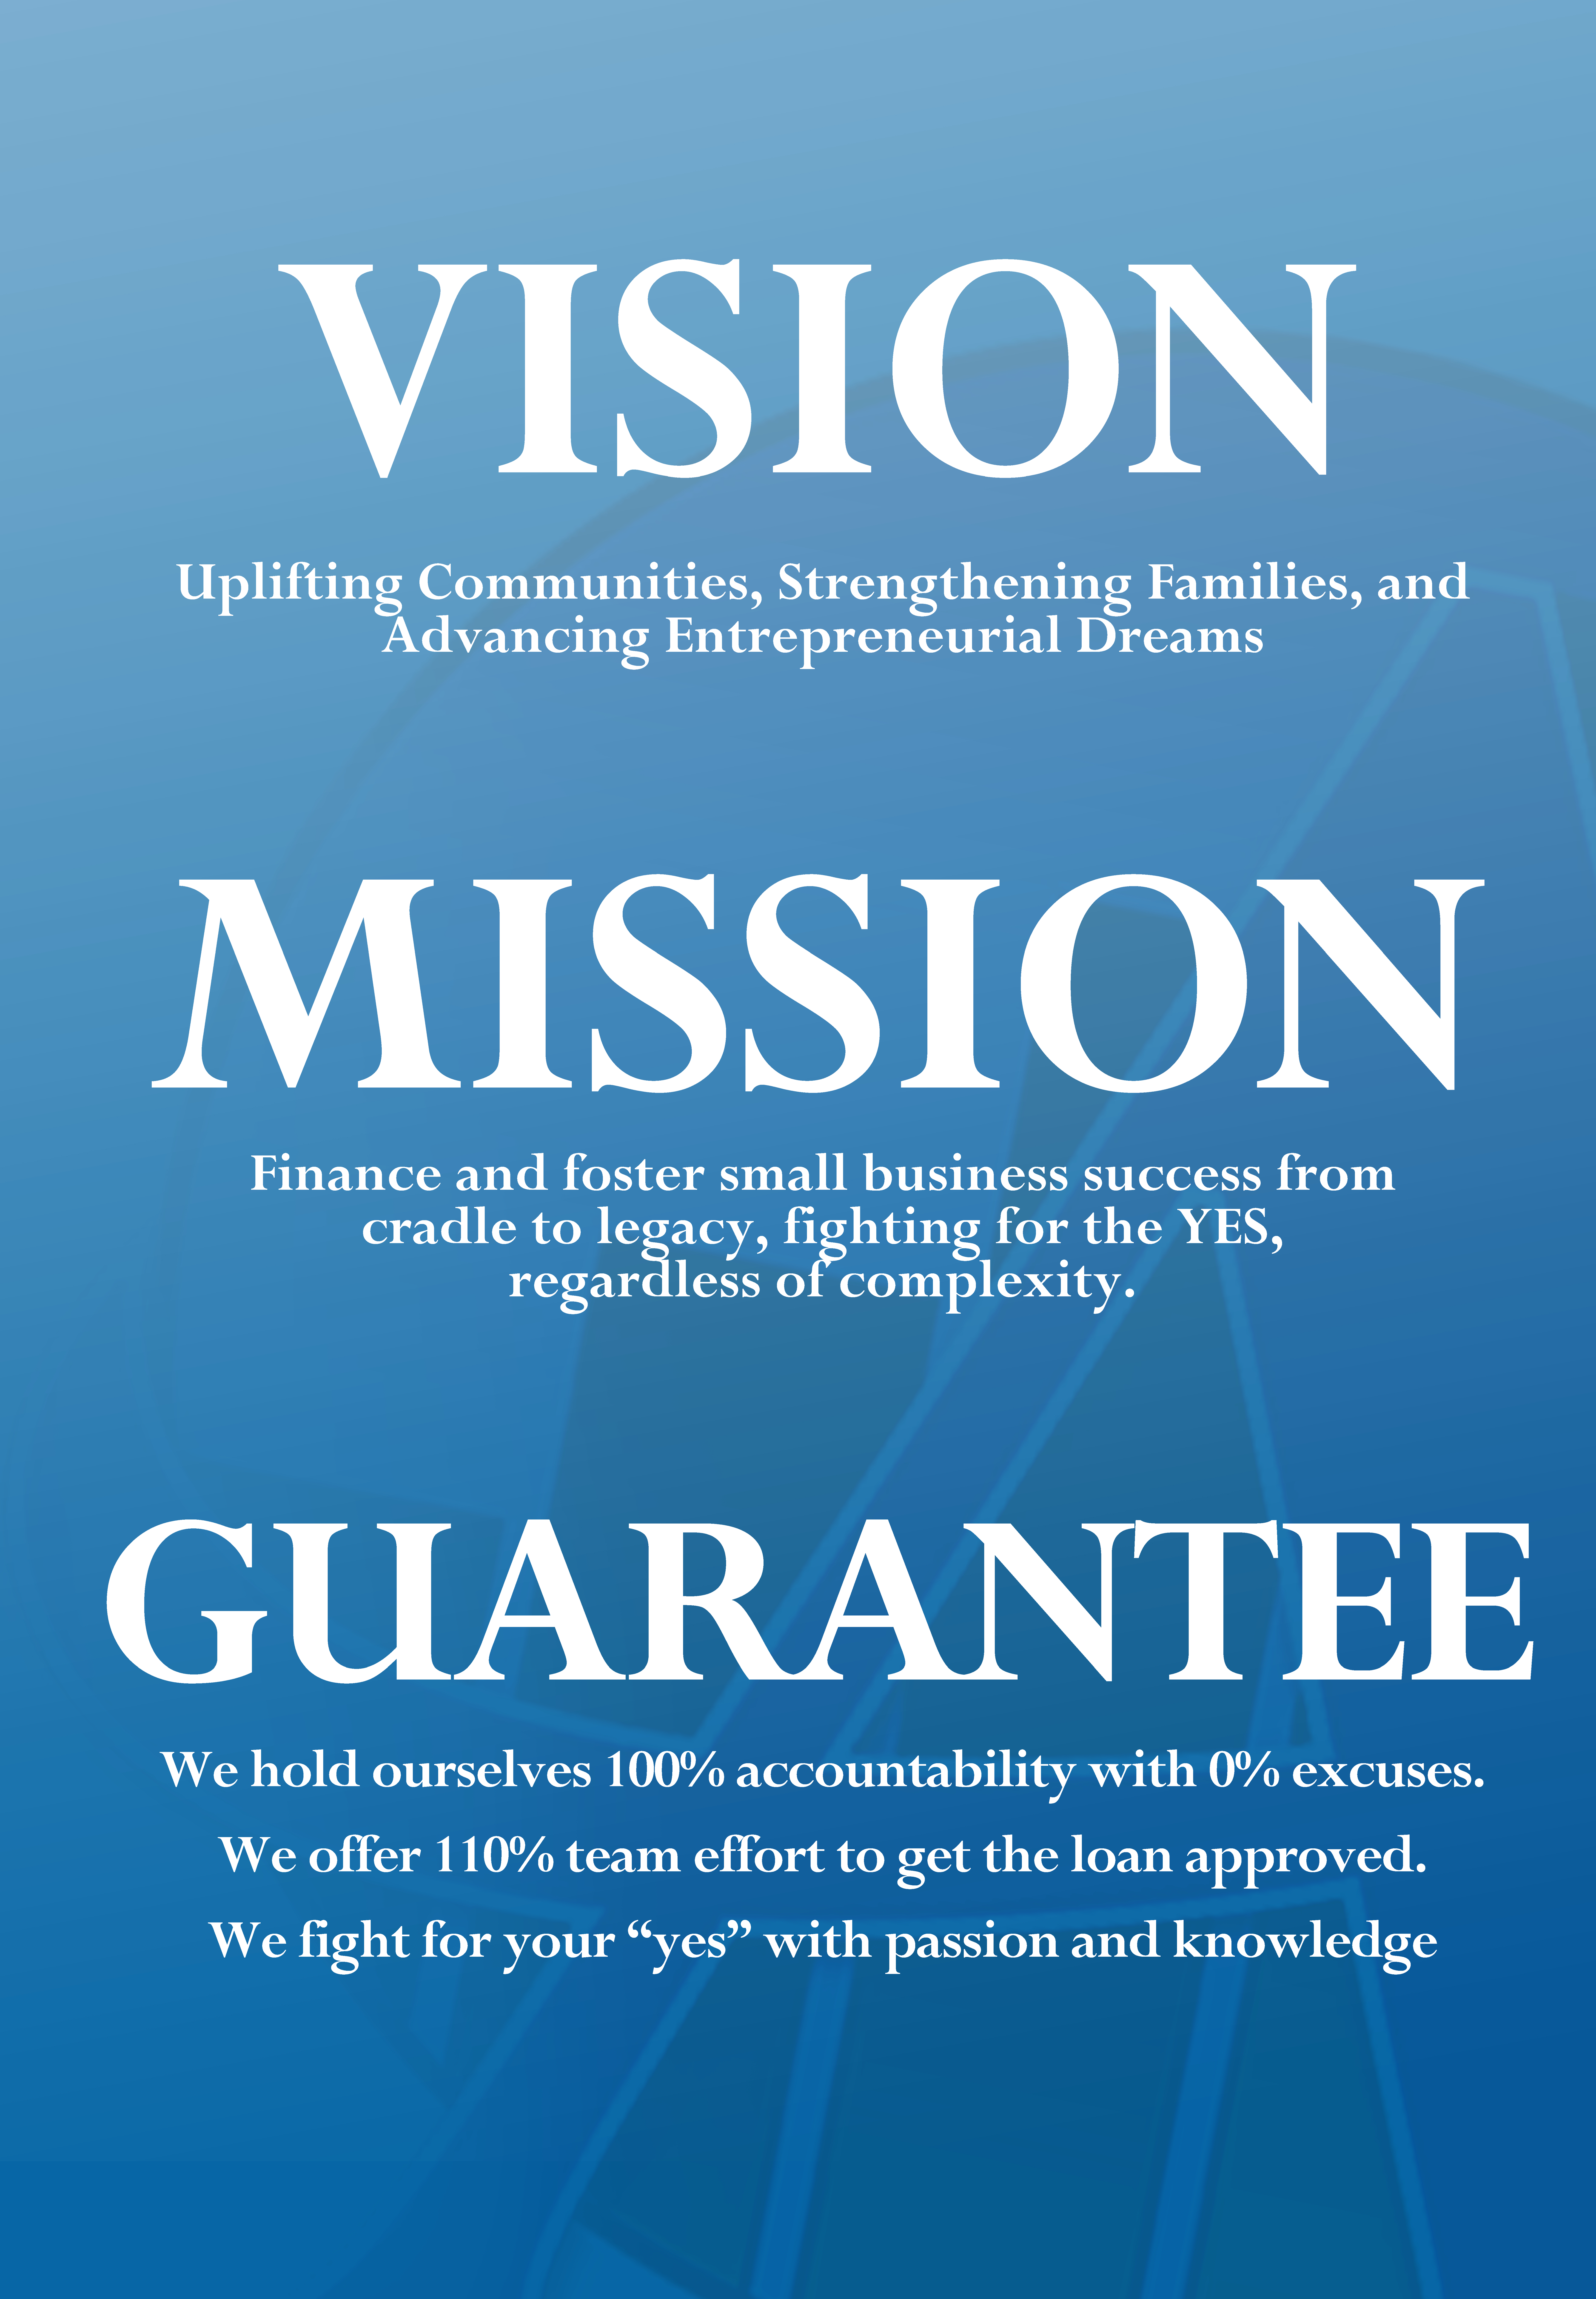 AMPAC VIsion Mission Guarantee